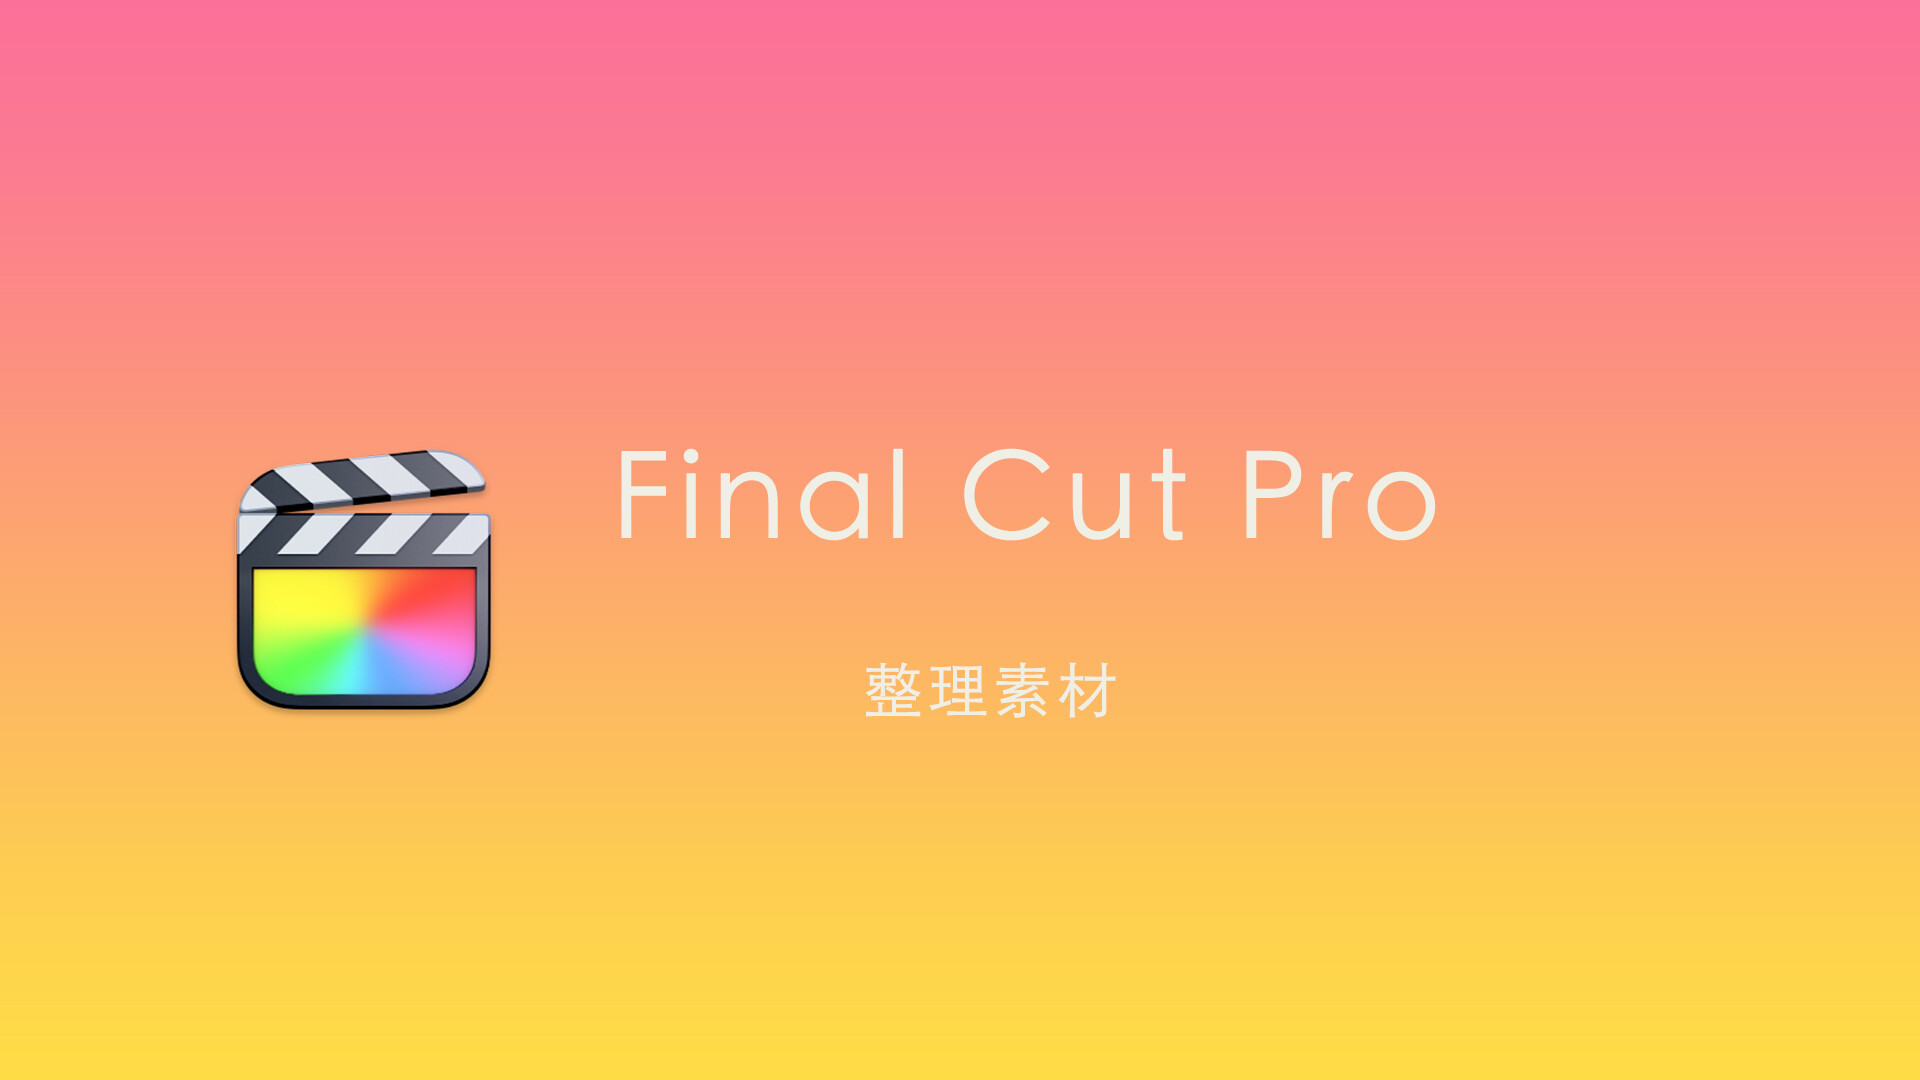 Final Cut Pro中文新手教程 (24) 整理素材